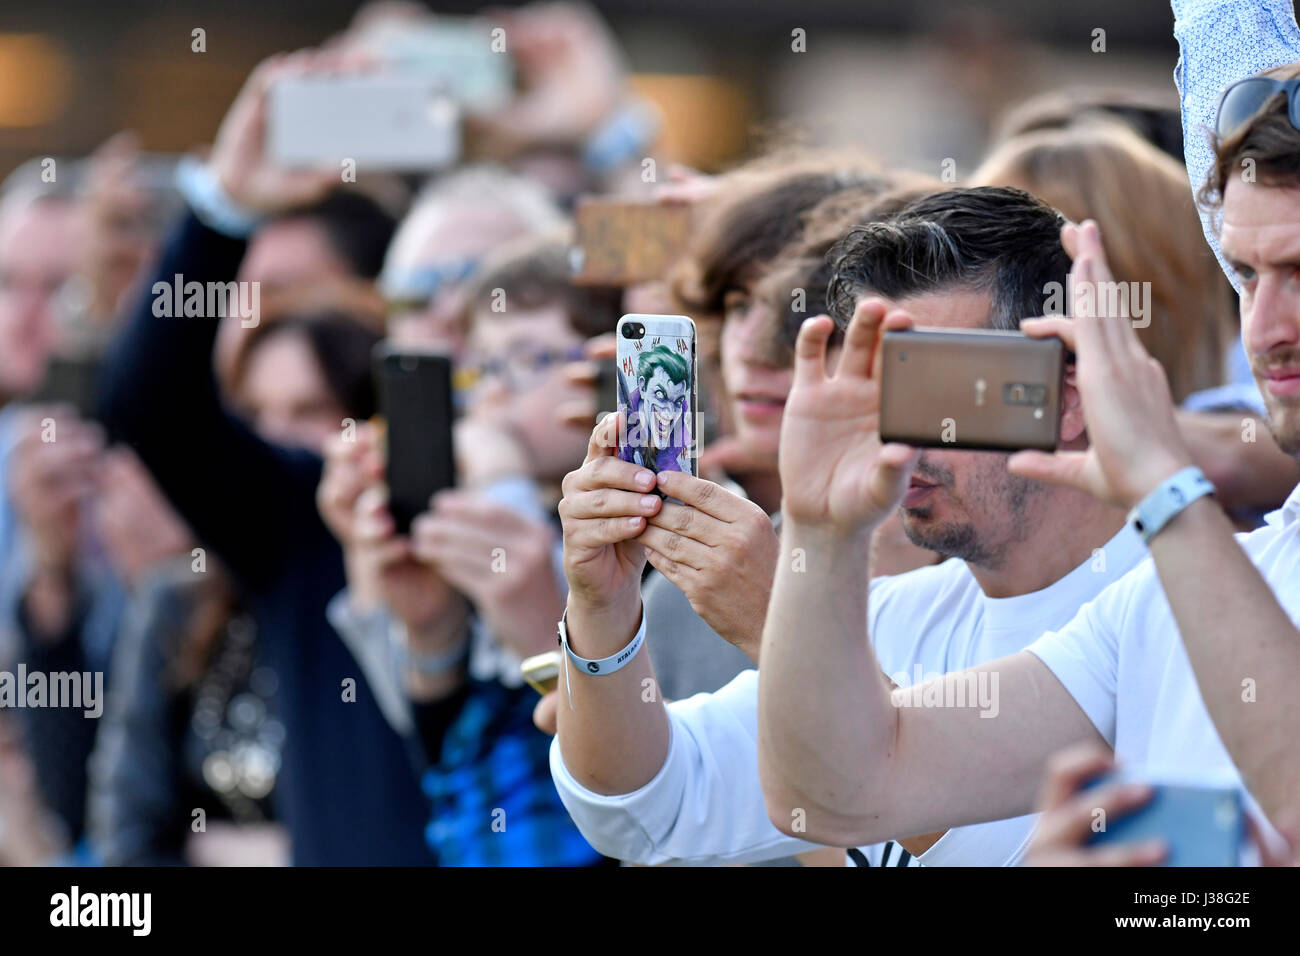 Soccer fans taking photos with their smartphone at the Atalanta stadium, Bergamo, Italy. Stock Photo